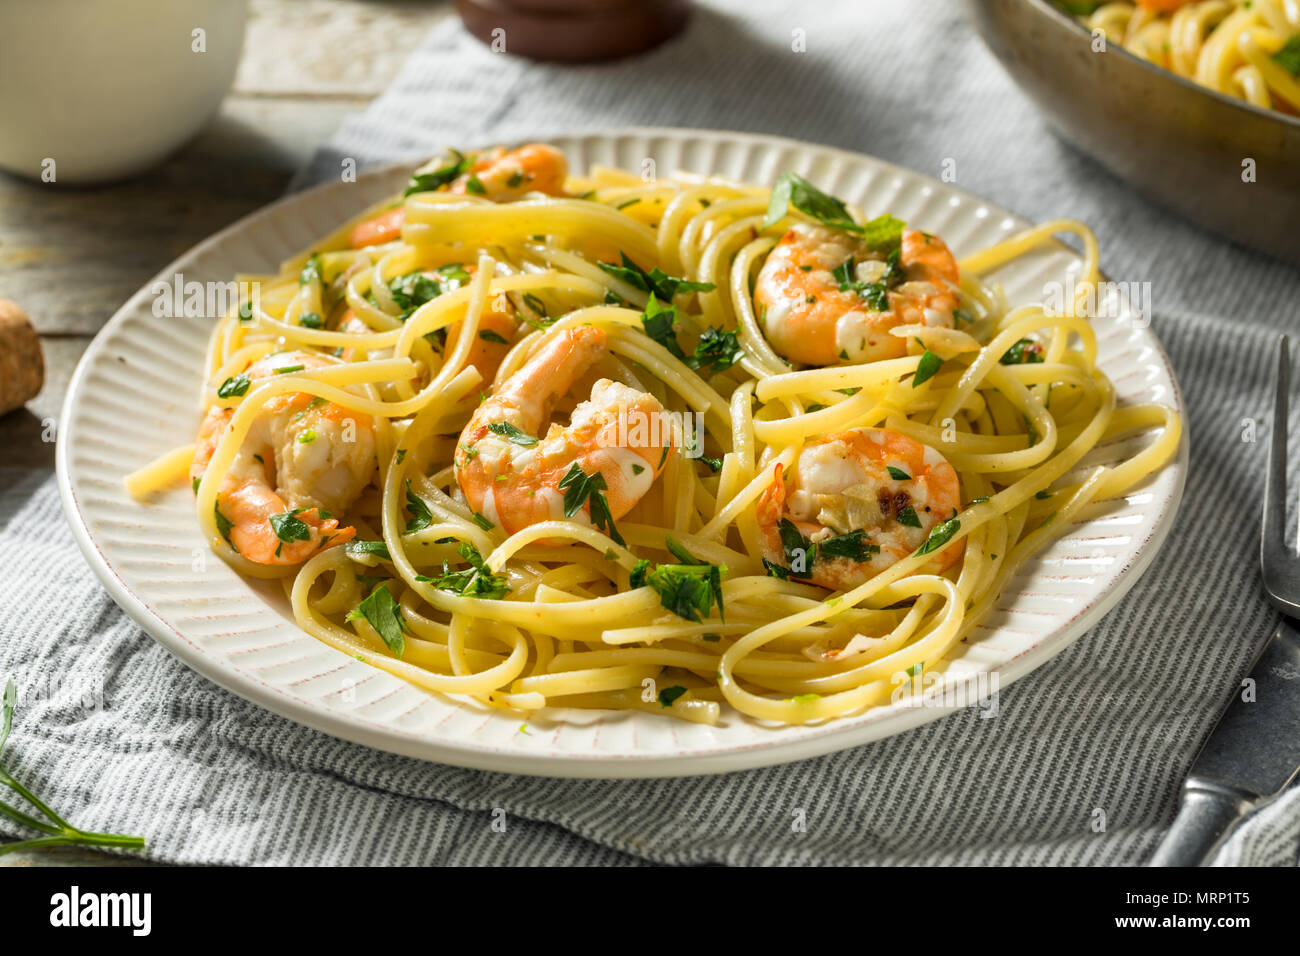 Homemade Lemon Shrimp Scampi with Garlic and Parsley Stock Photo